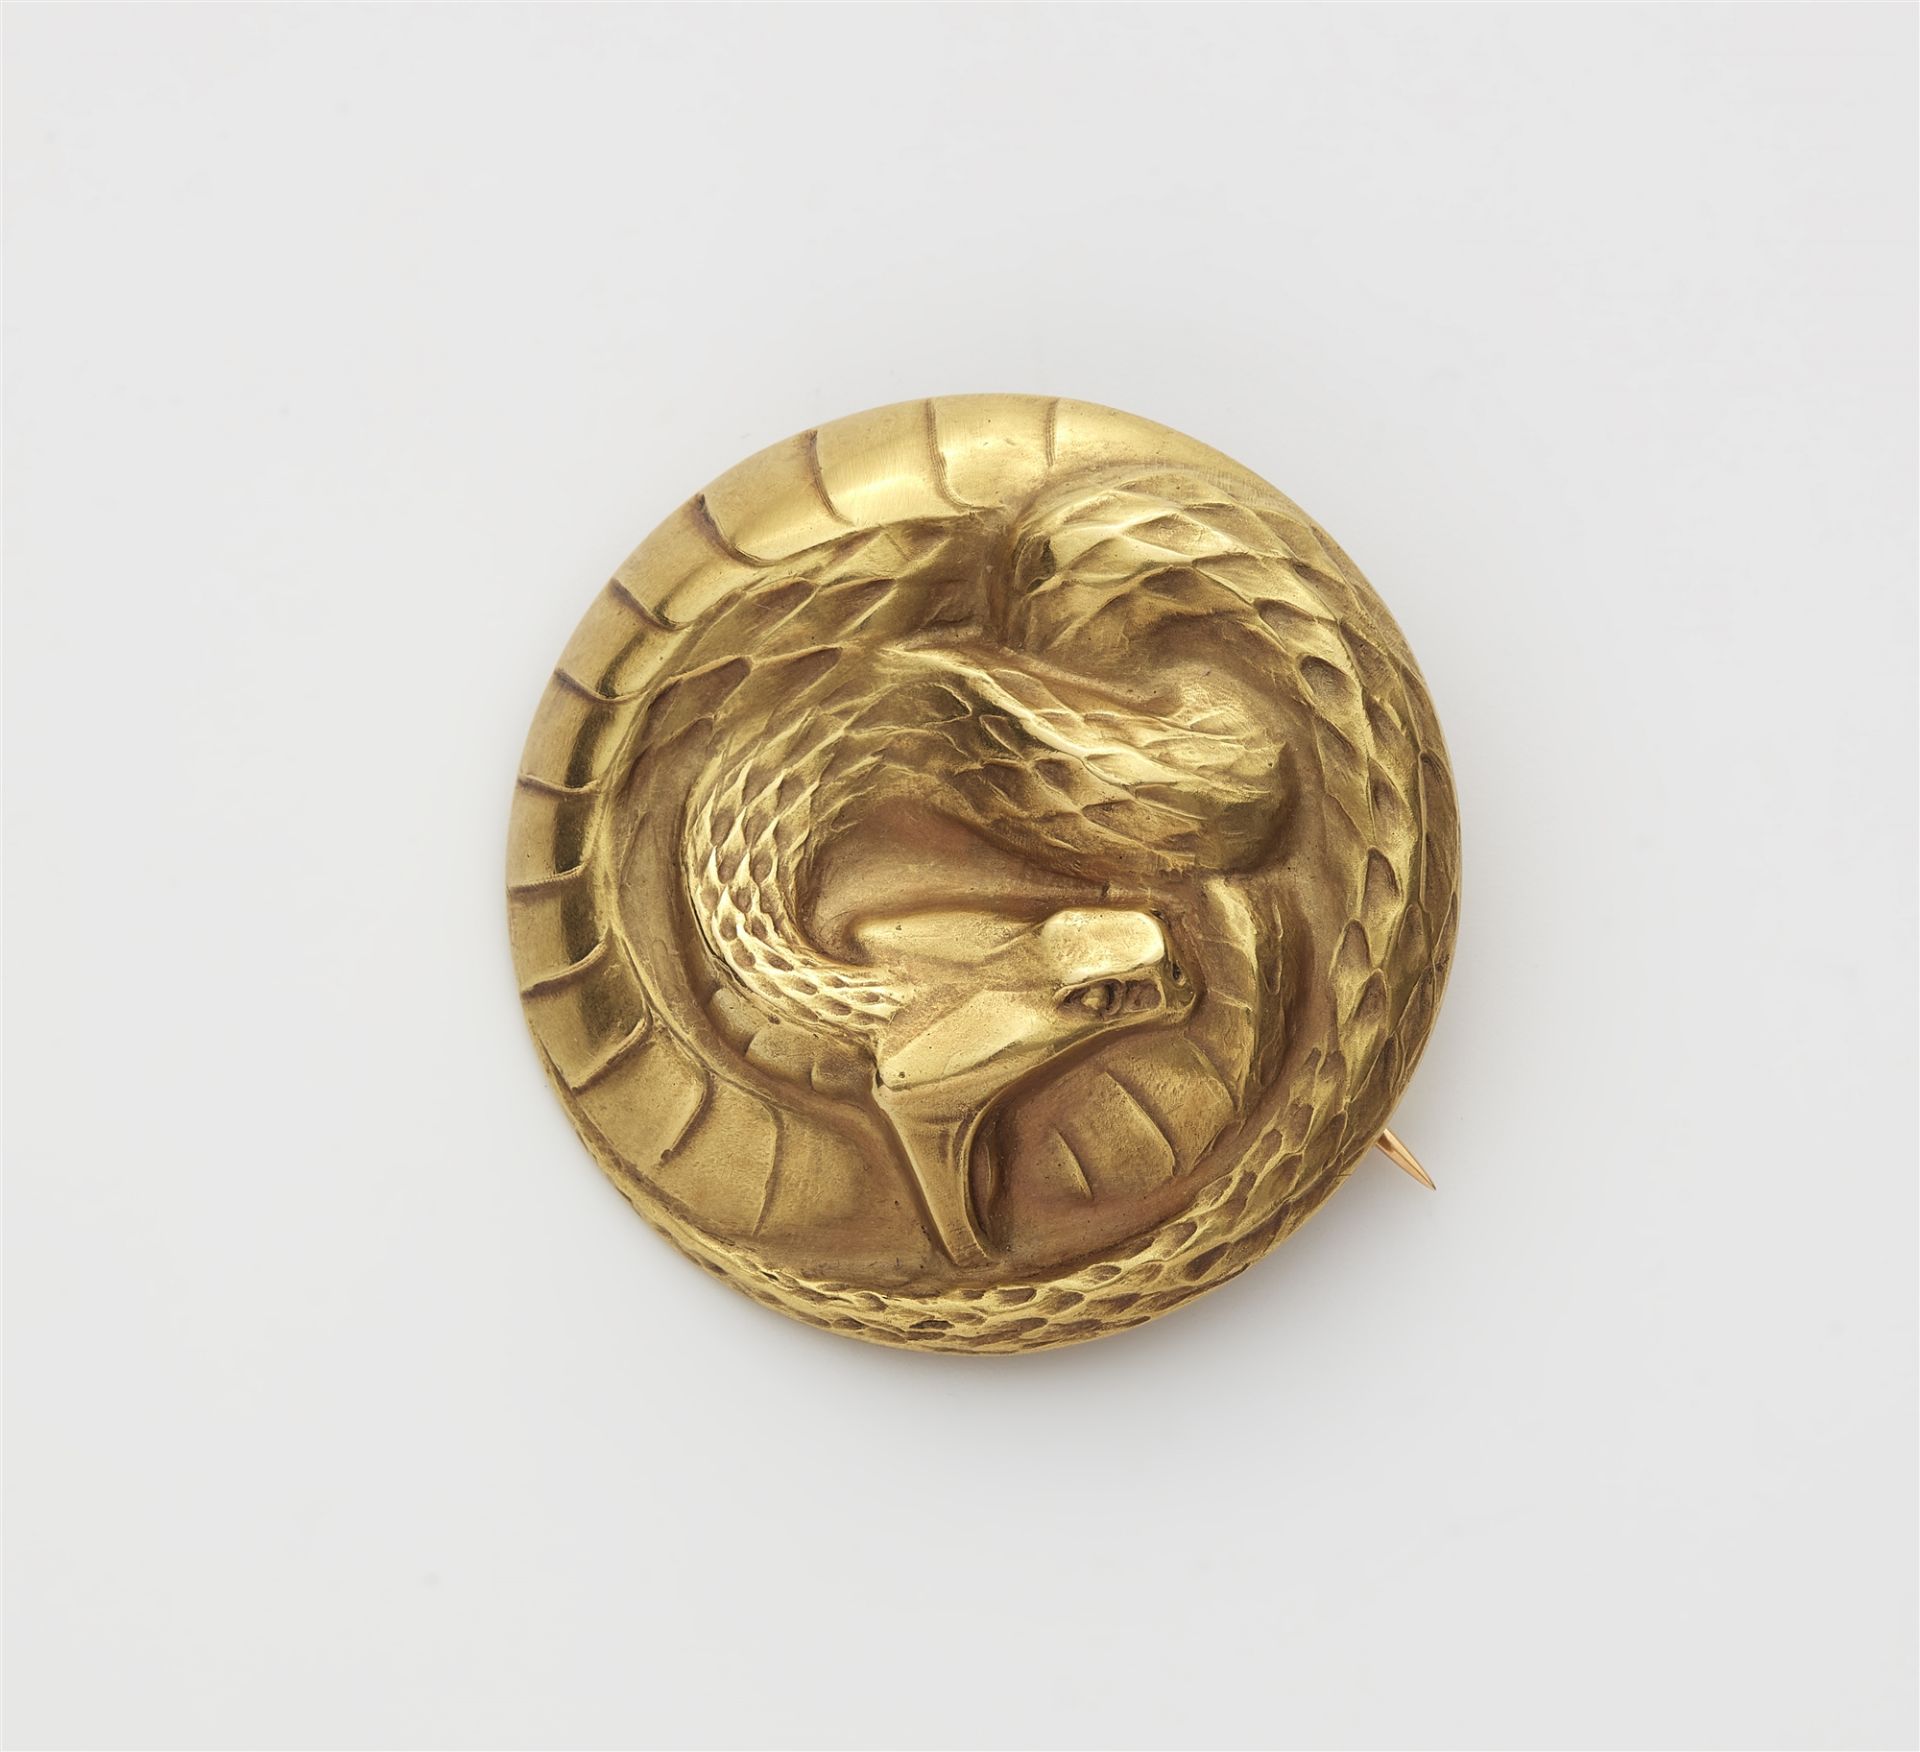 A French Art Nouveau 18k gold snake hat pin with Wartski leather case.